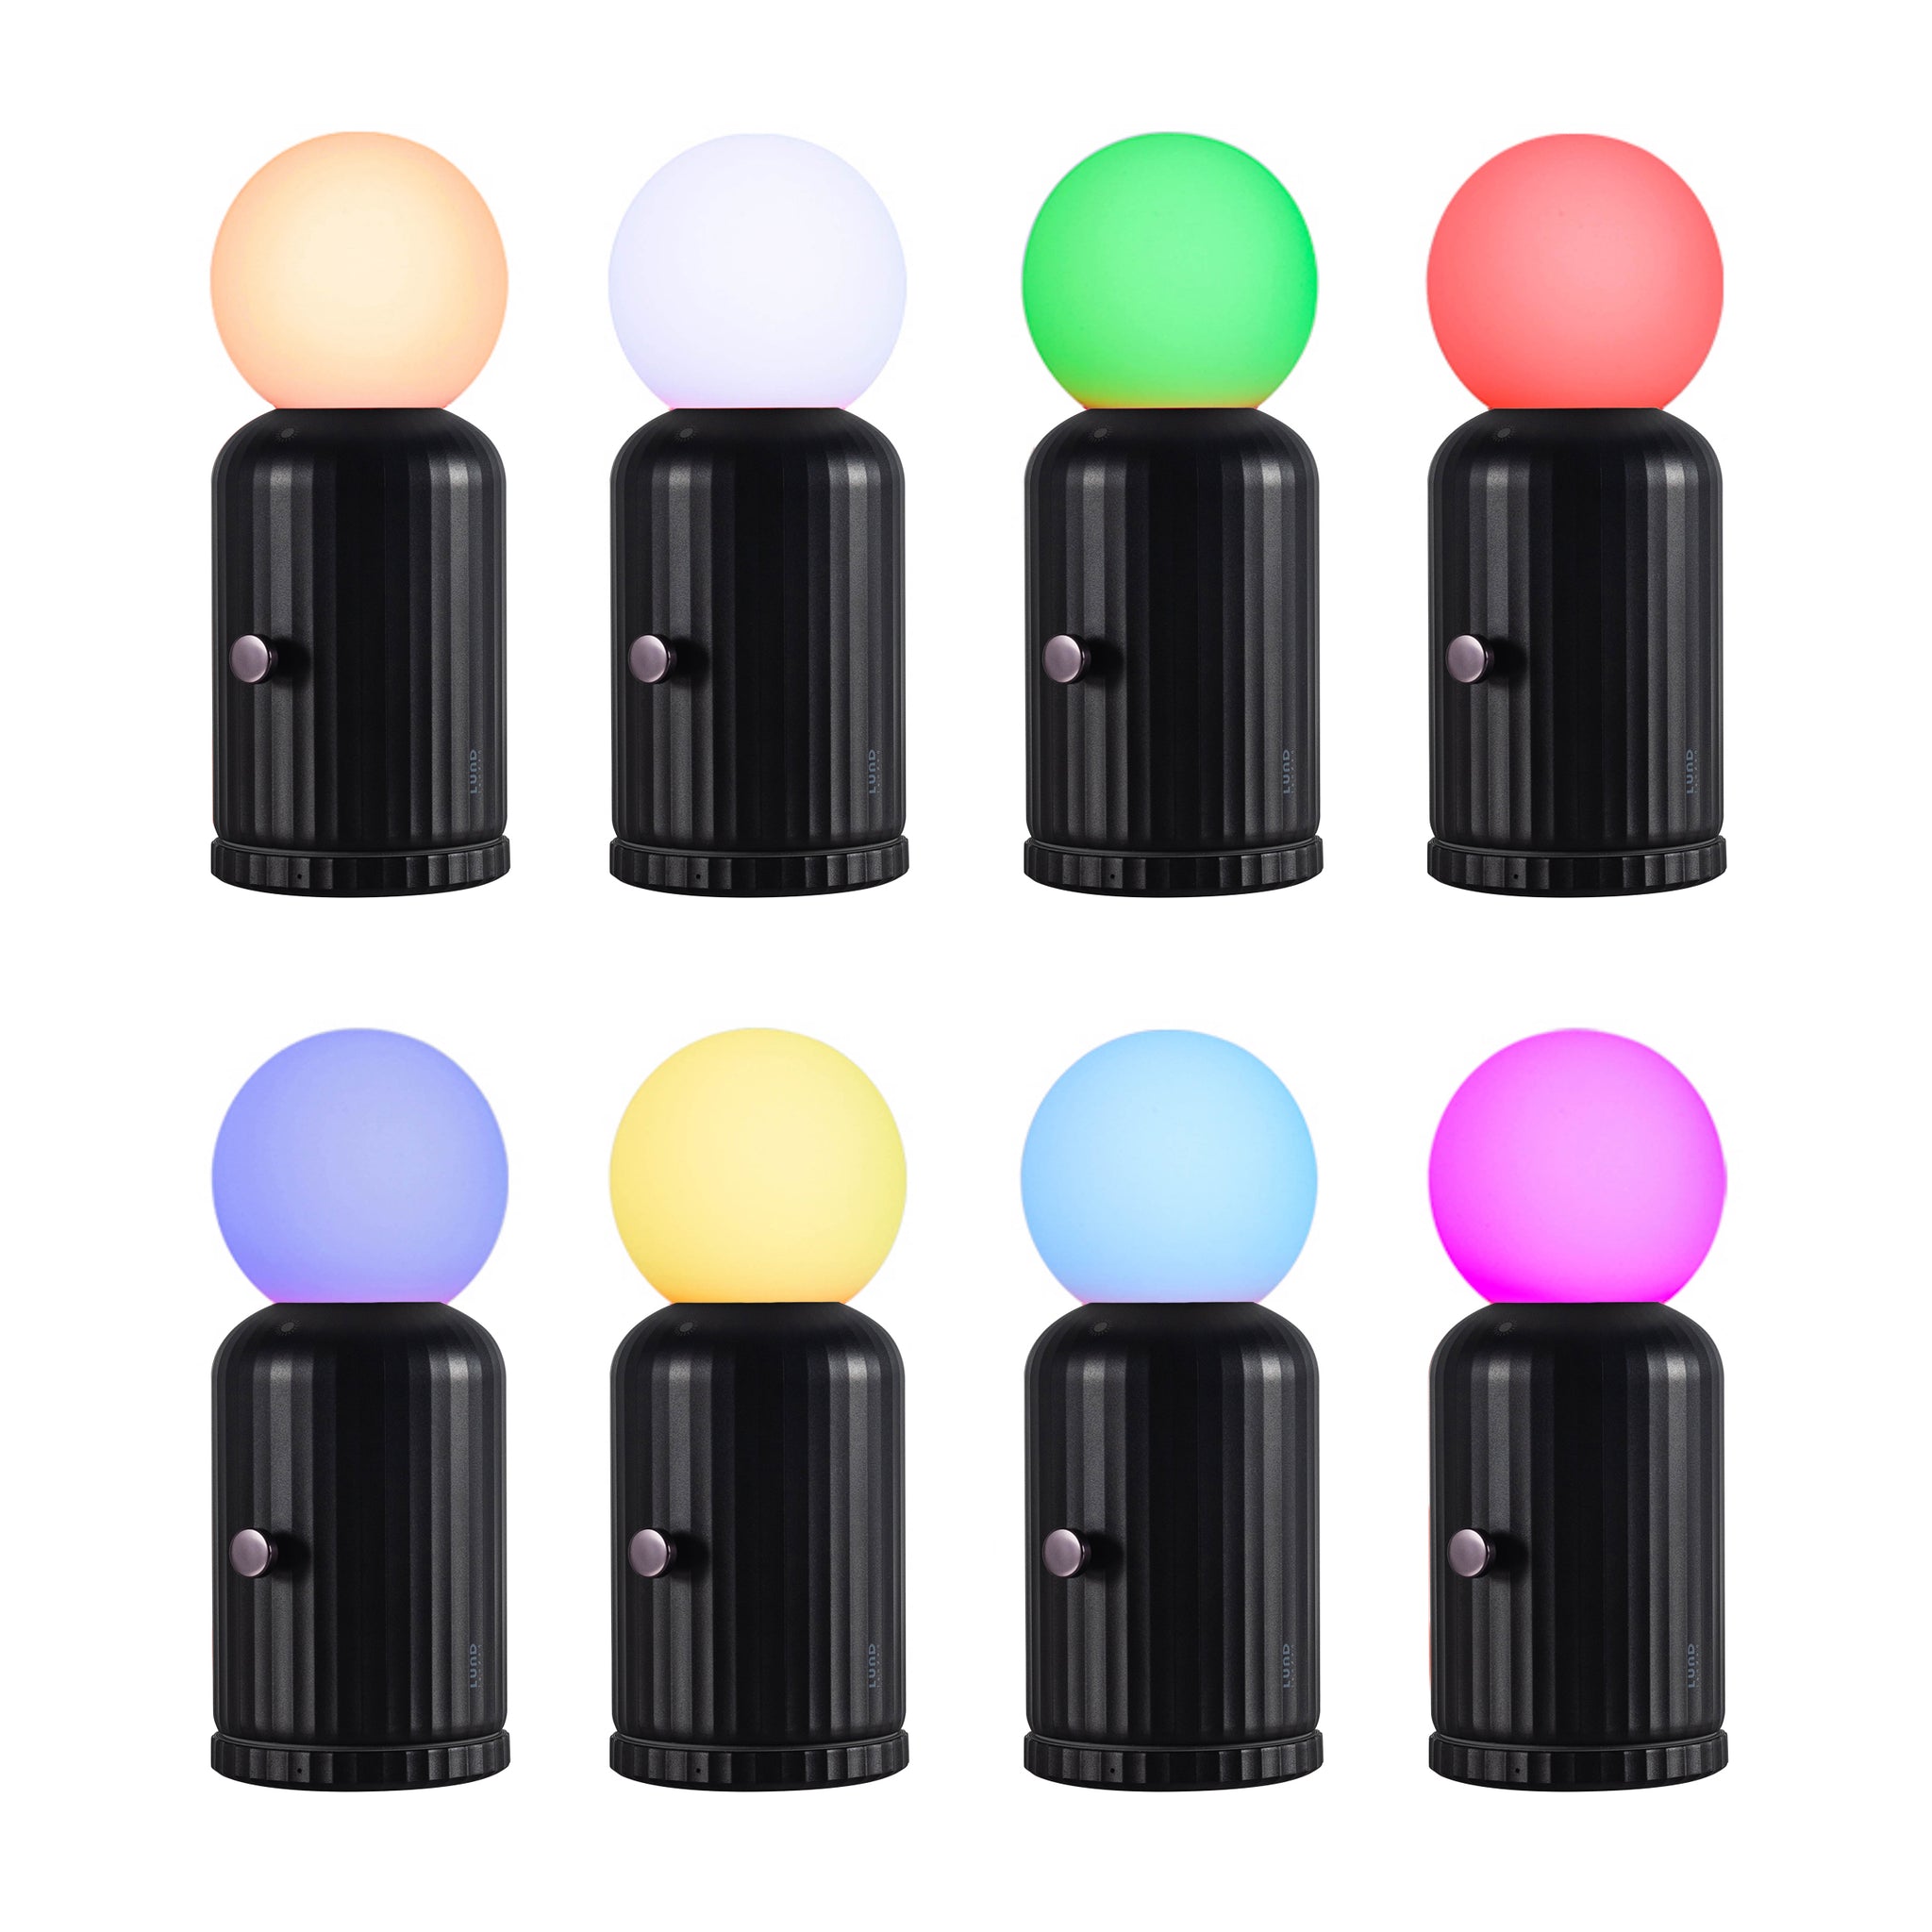 Skittle Oplaadbare Lamp Zwart│Lund London│Draadloos│afbeedling 8 verschillende kleuren licht